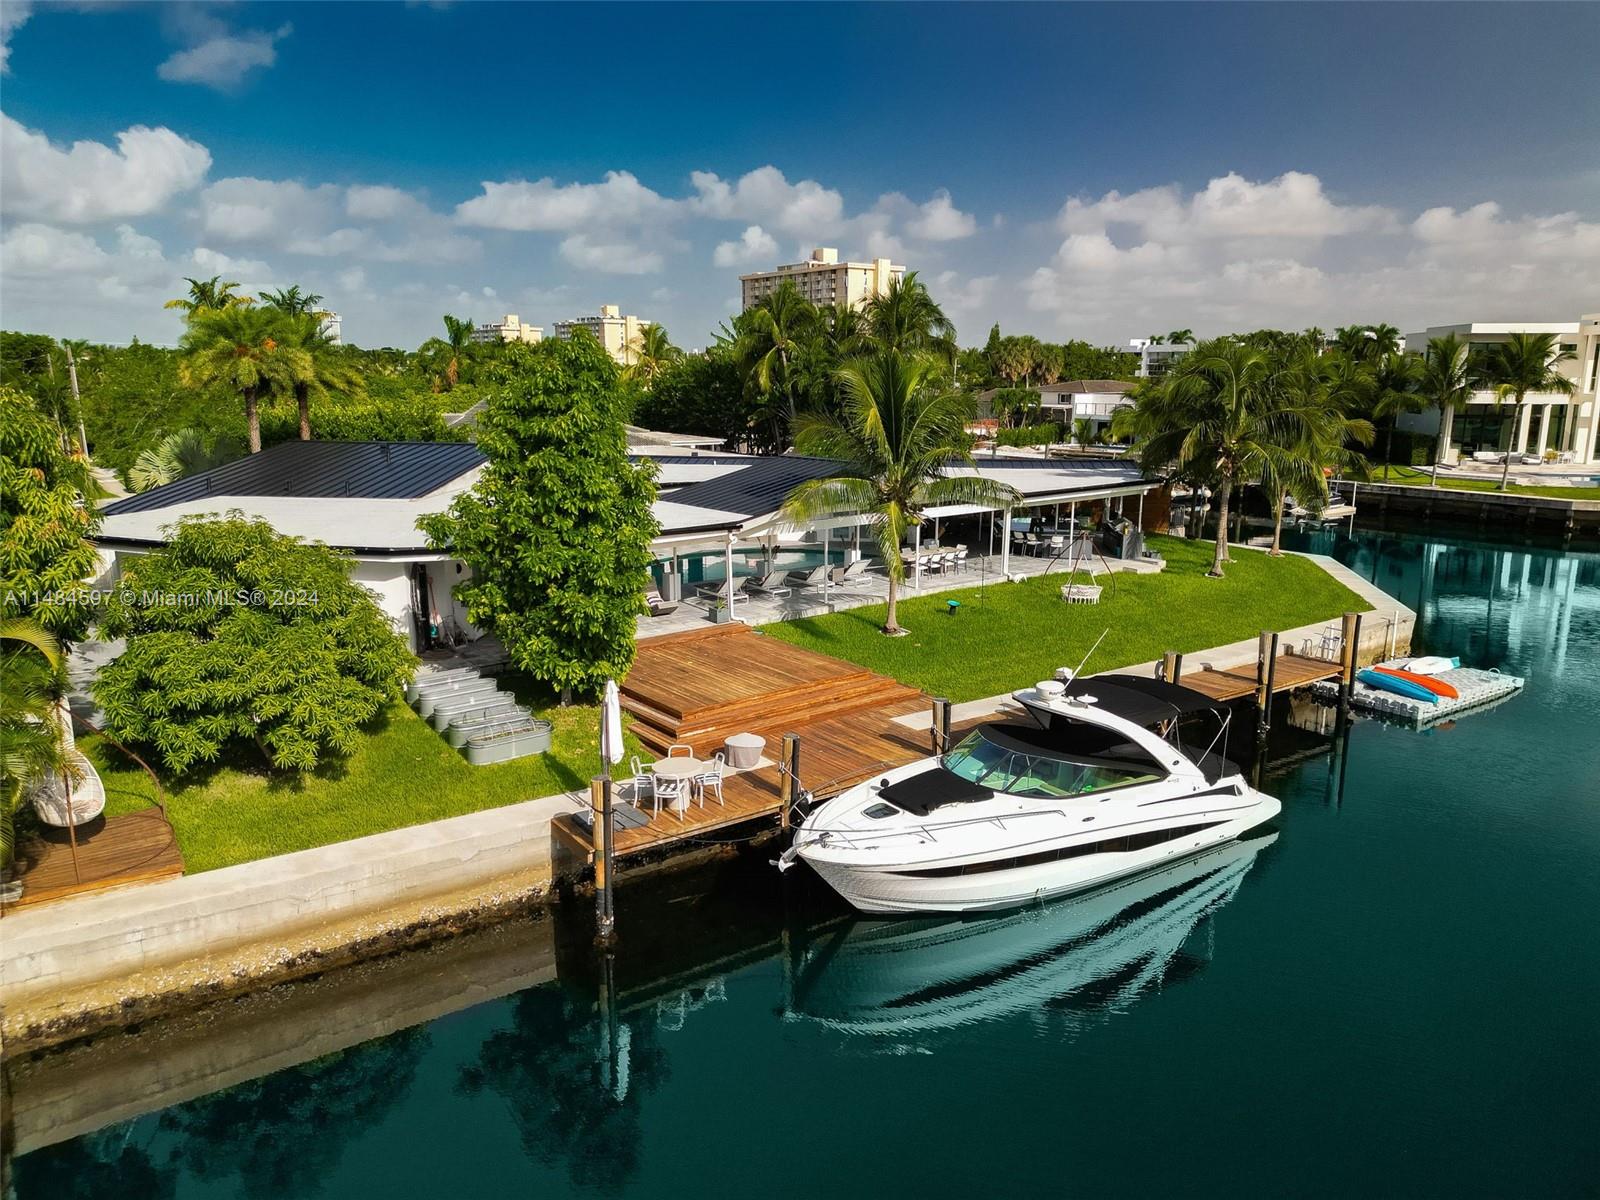 Property for Sale at 2415 Magnolia Dr, North Miami, Miami-Dade County, Florida - Bedrooms: 6 
Bathrooms: 5  - $5,250,000